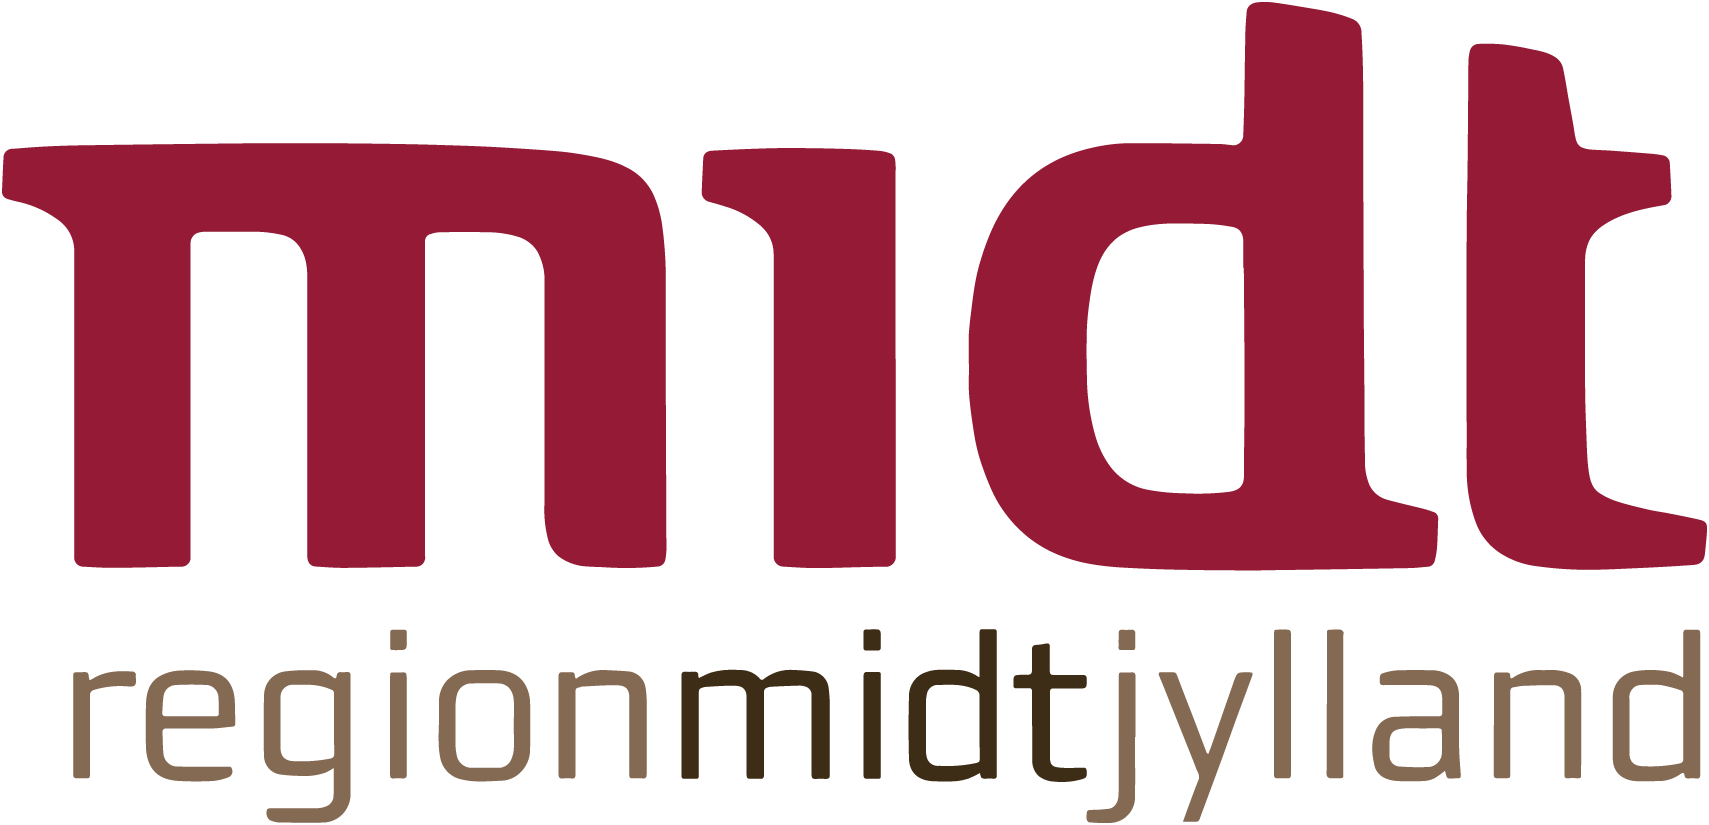 region midtjylland logo color